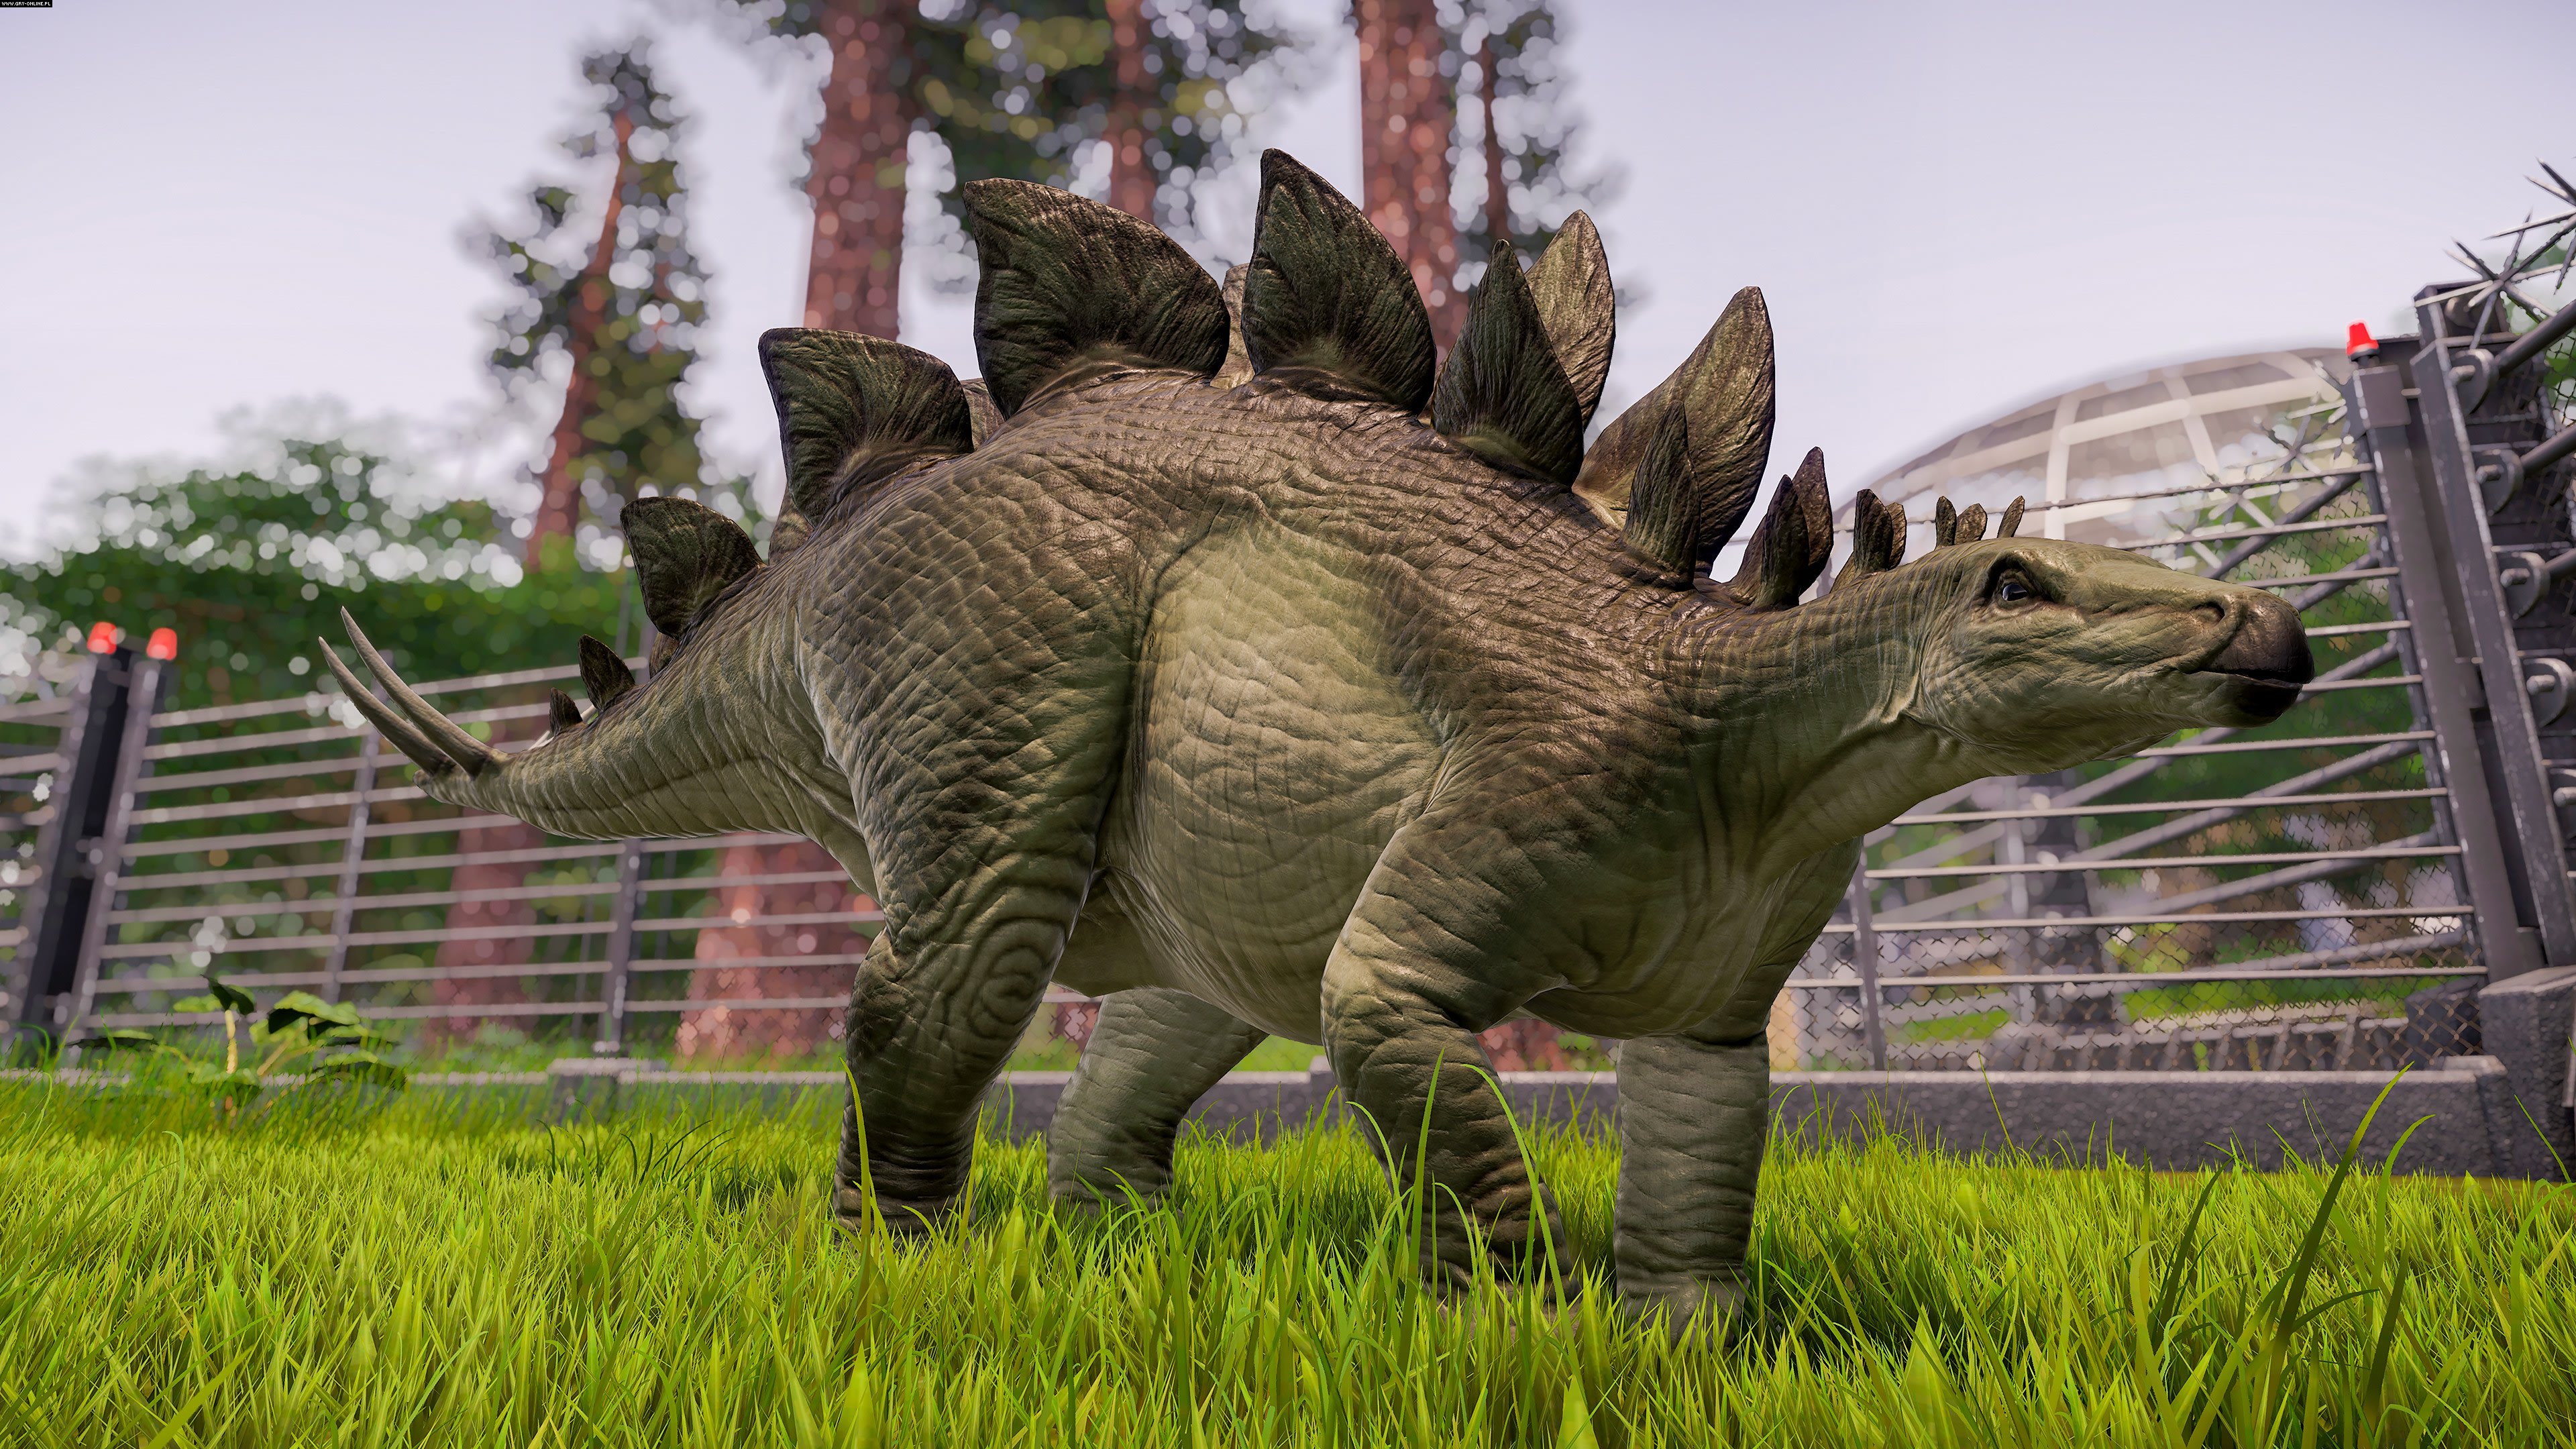 instal the new for ios Wild Dinosaur Simulator: Jurassic Age